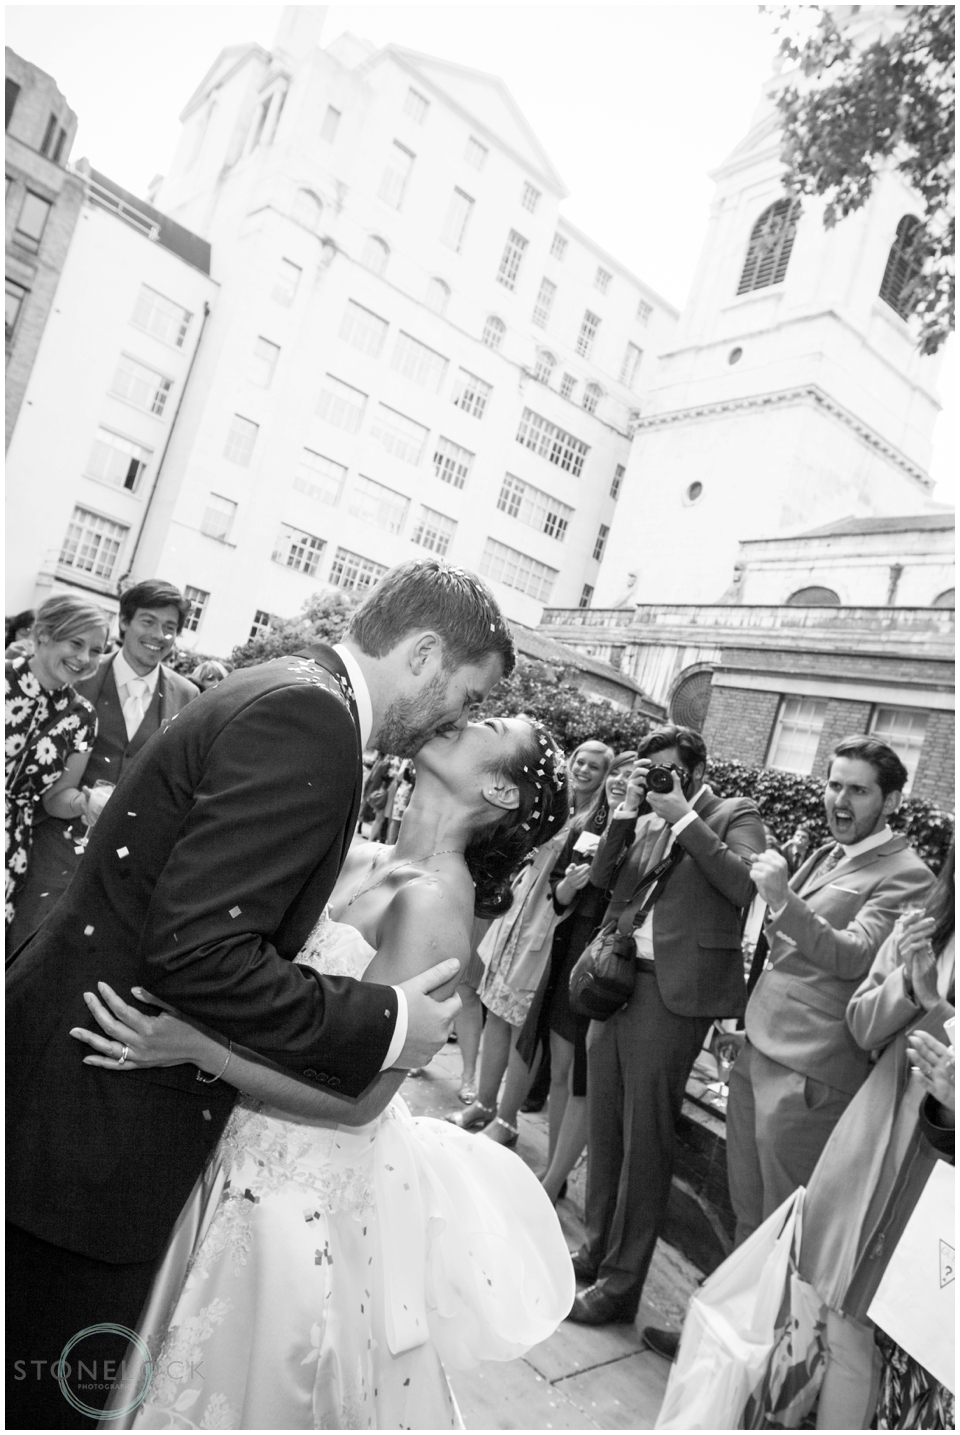 Bride and groom kiss outside St Bride's Foundation in Fleet Street London 